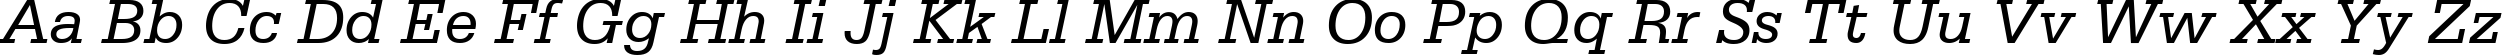 Пример написания английского алфавита шрифтом Serifa Italic BT